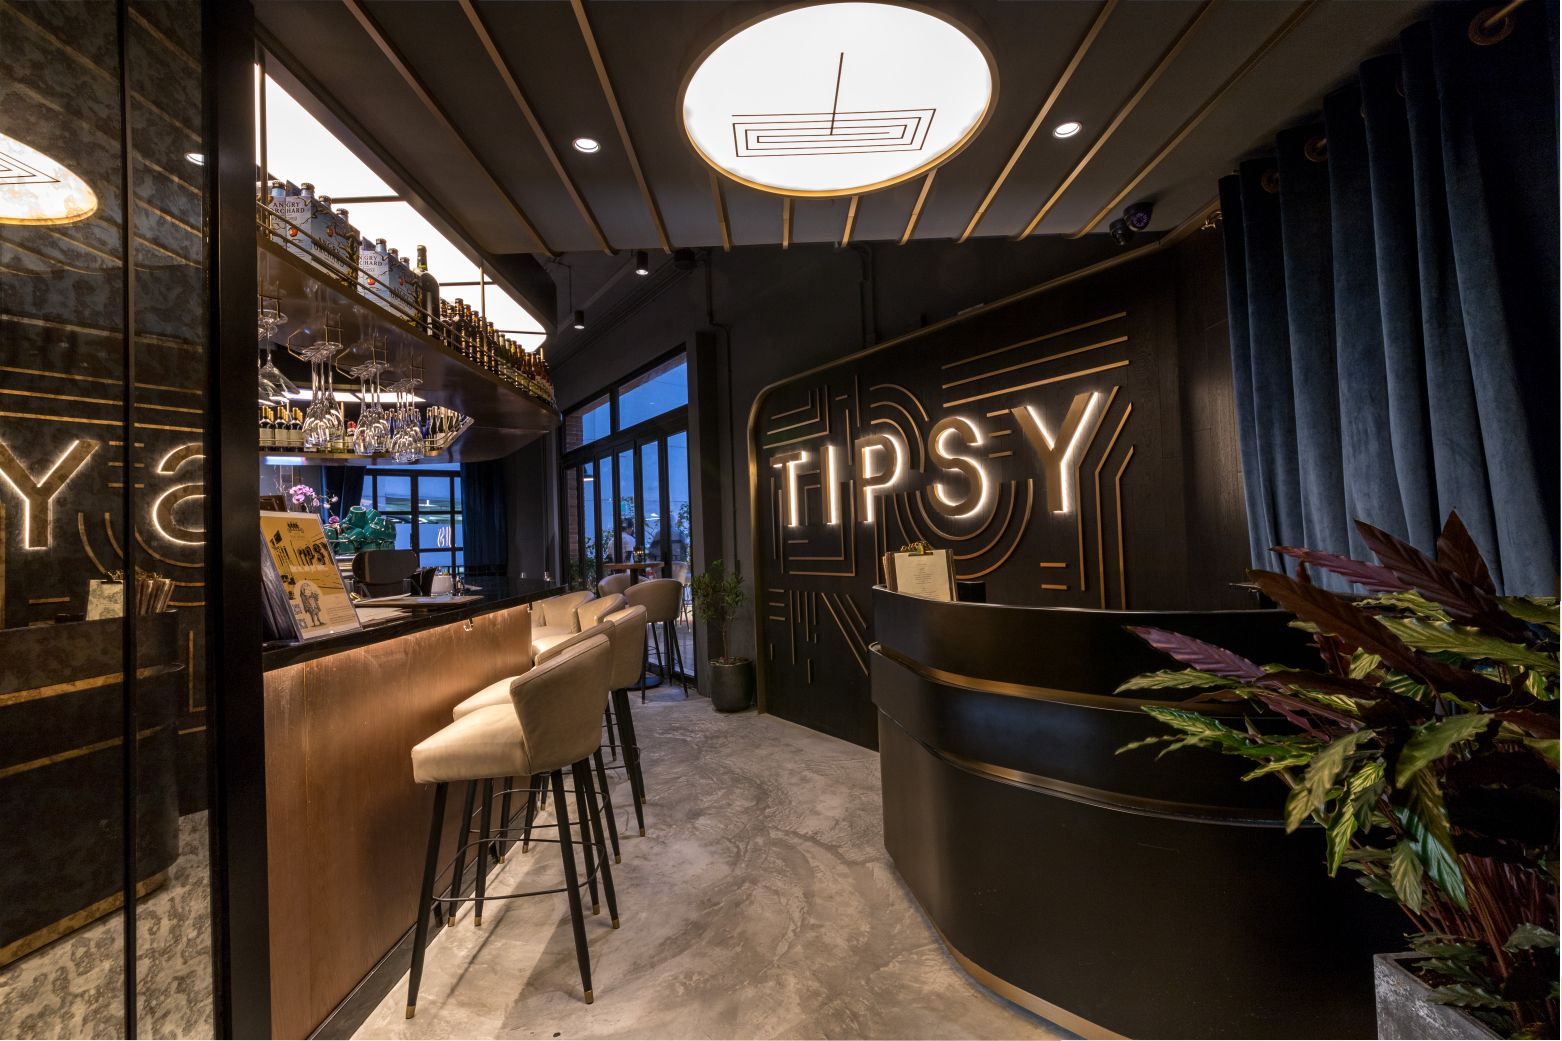 Tipsy Restaurant & Bar’s reception. Photo courtesy of Spice Marketing Communications.